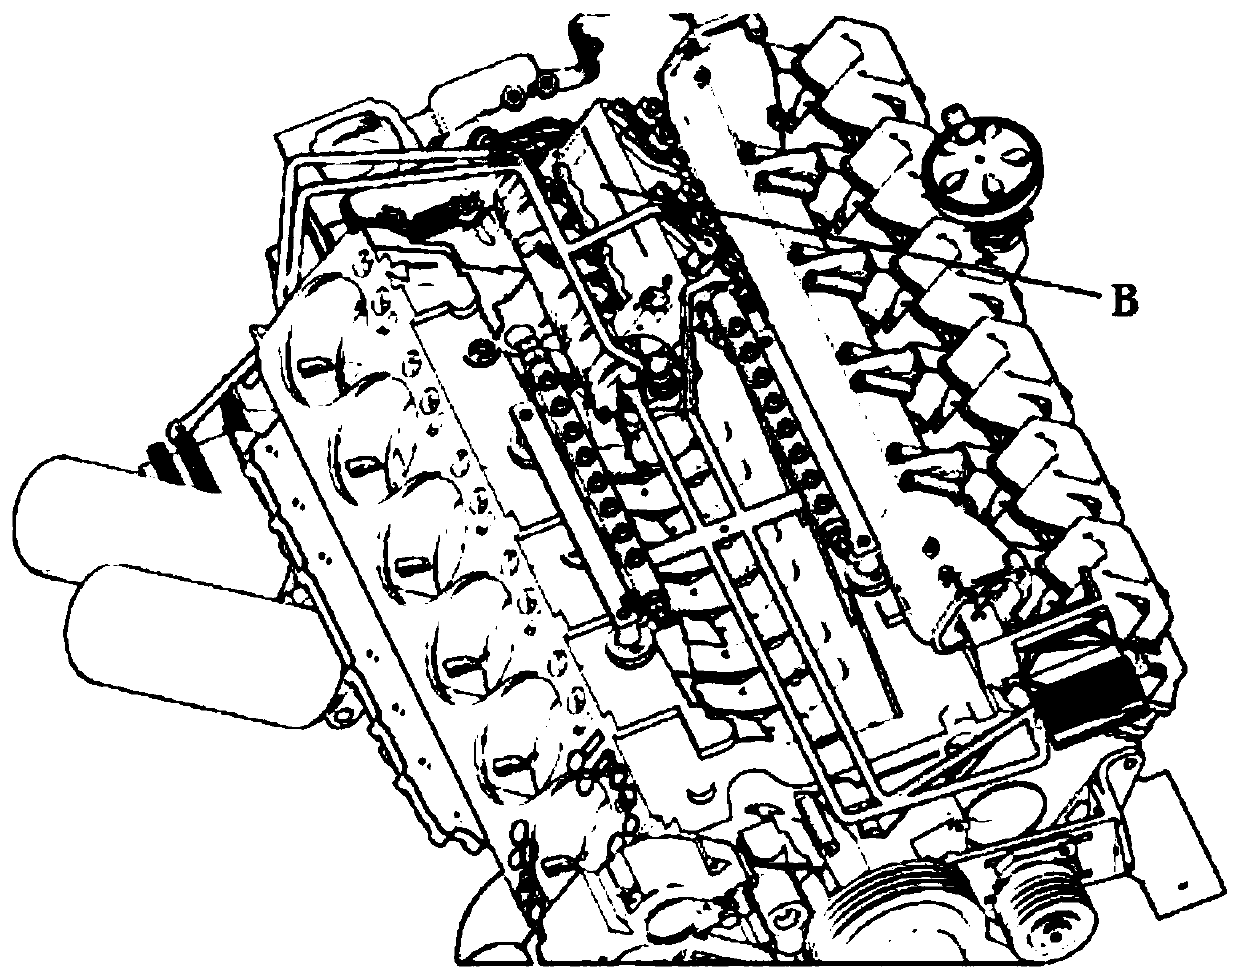 A diesel engine high pressure common rail system